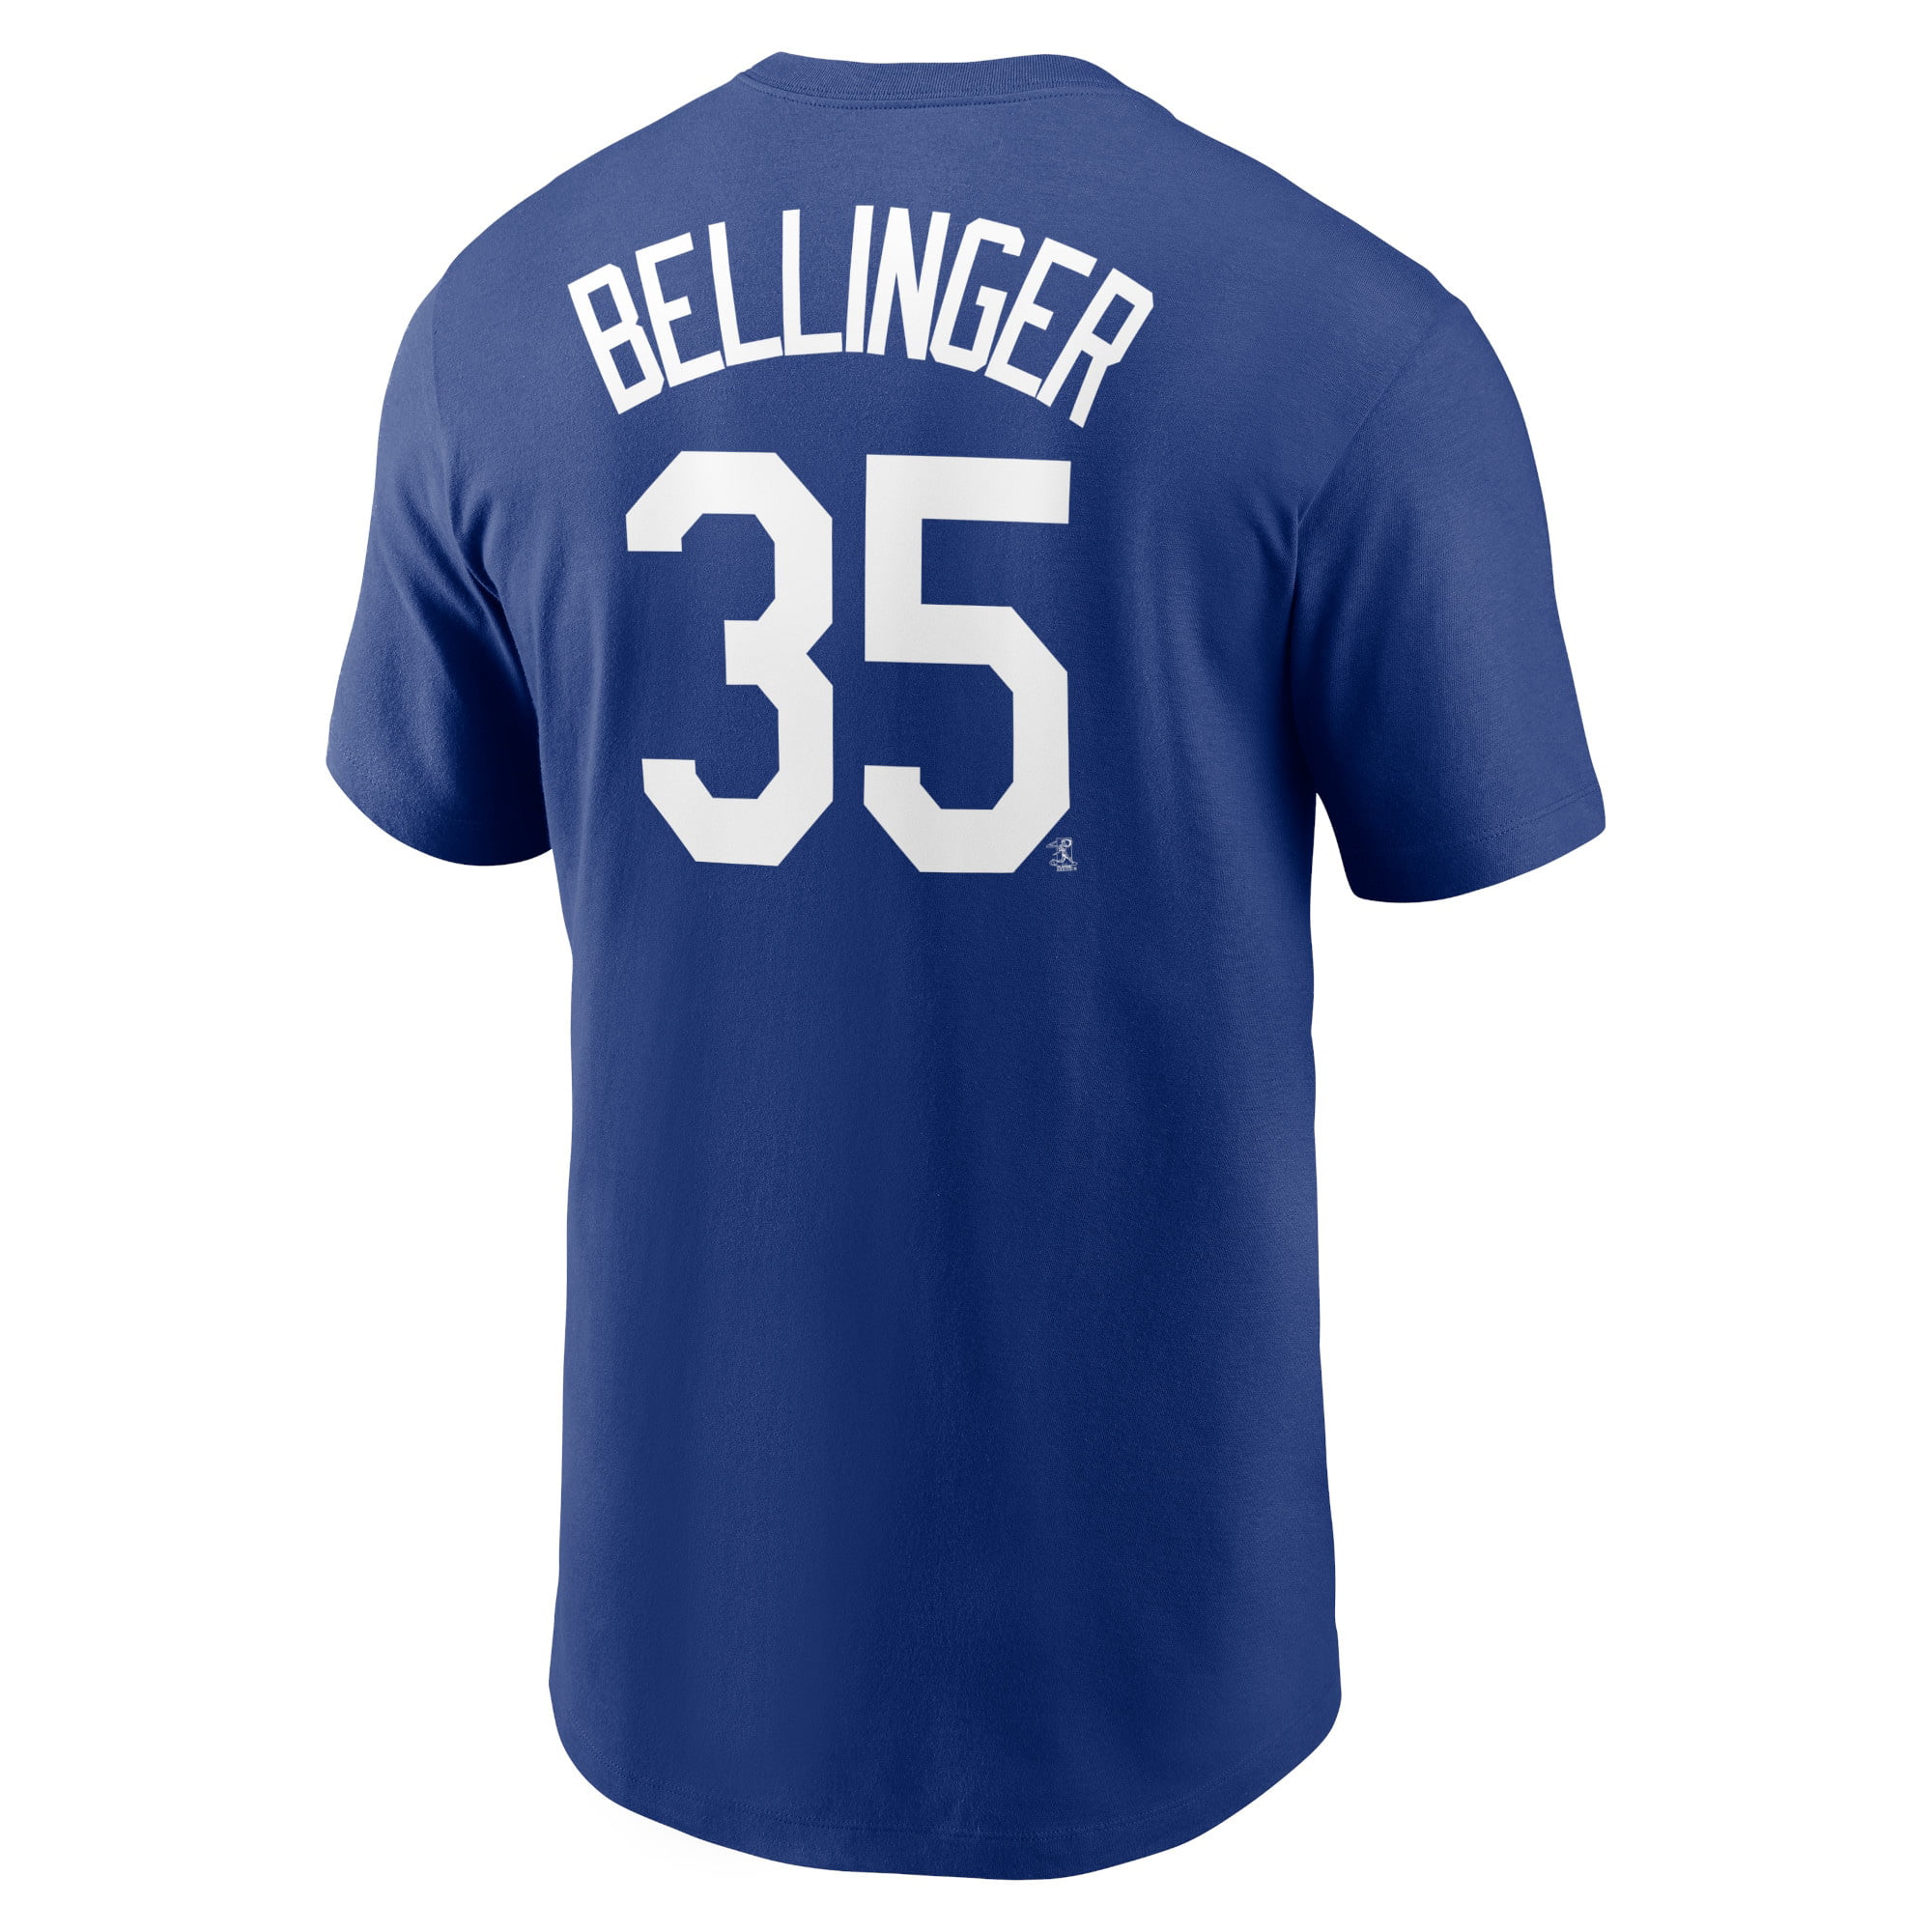 Cody Bellinger Bellinger 35 T-Shirt - Apparel